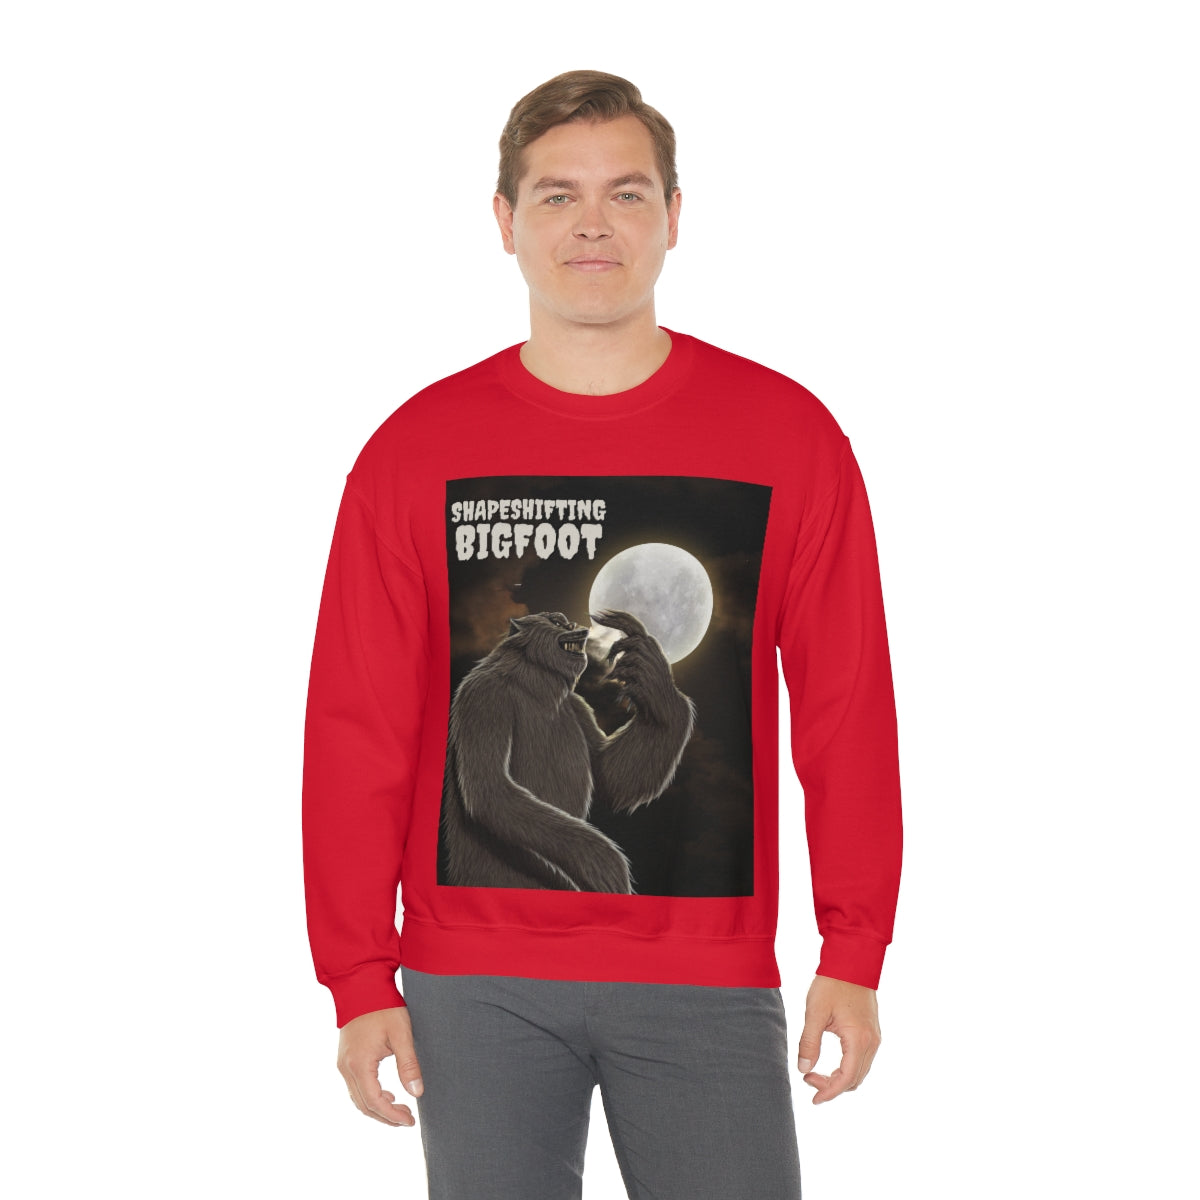 Shapeshifting Bigfoot Sweatshirt